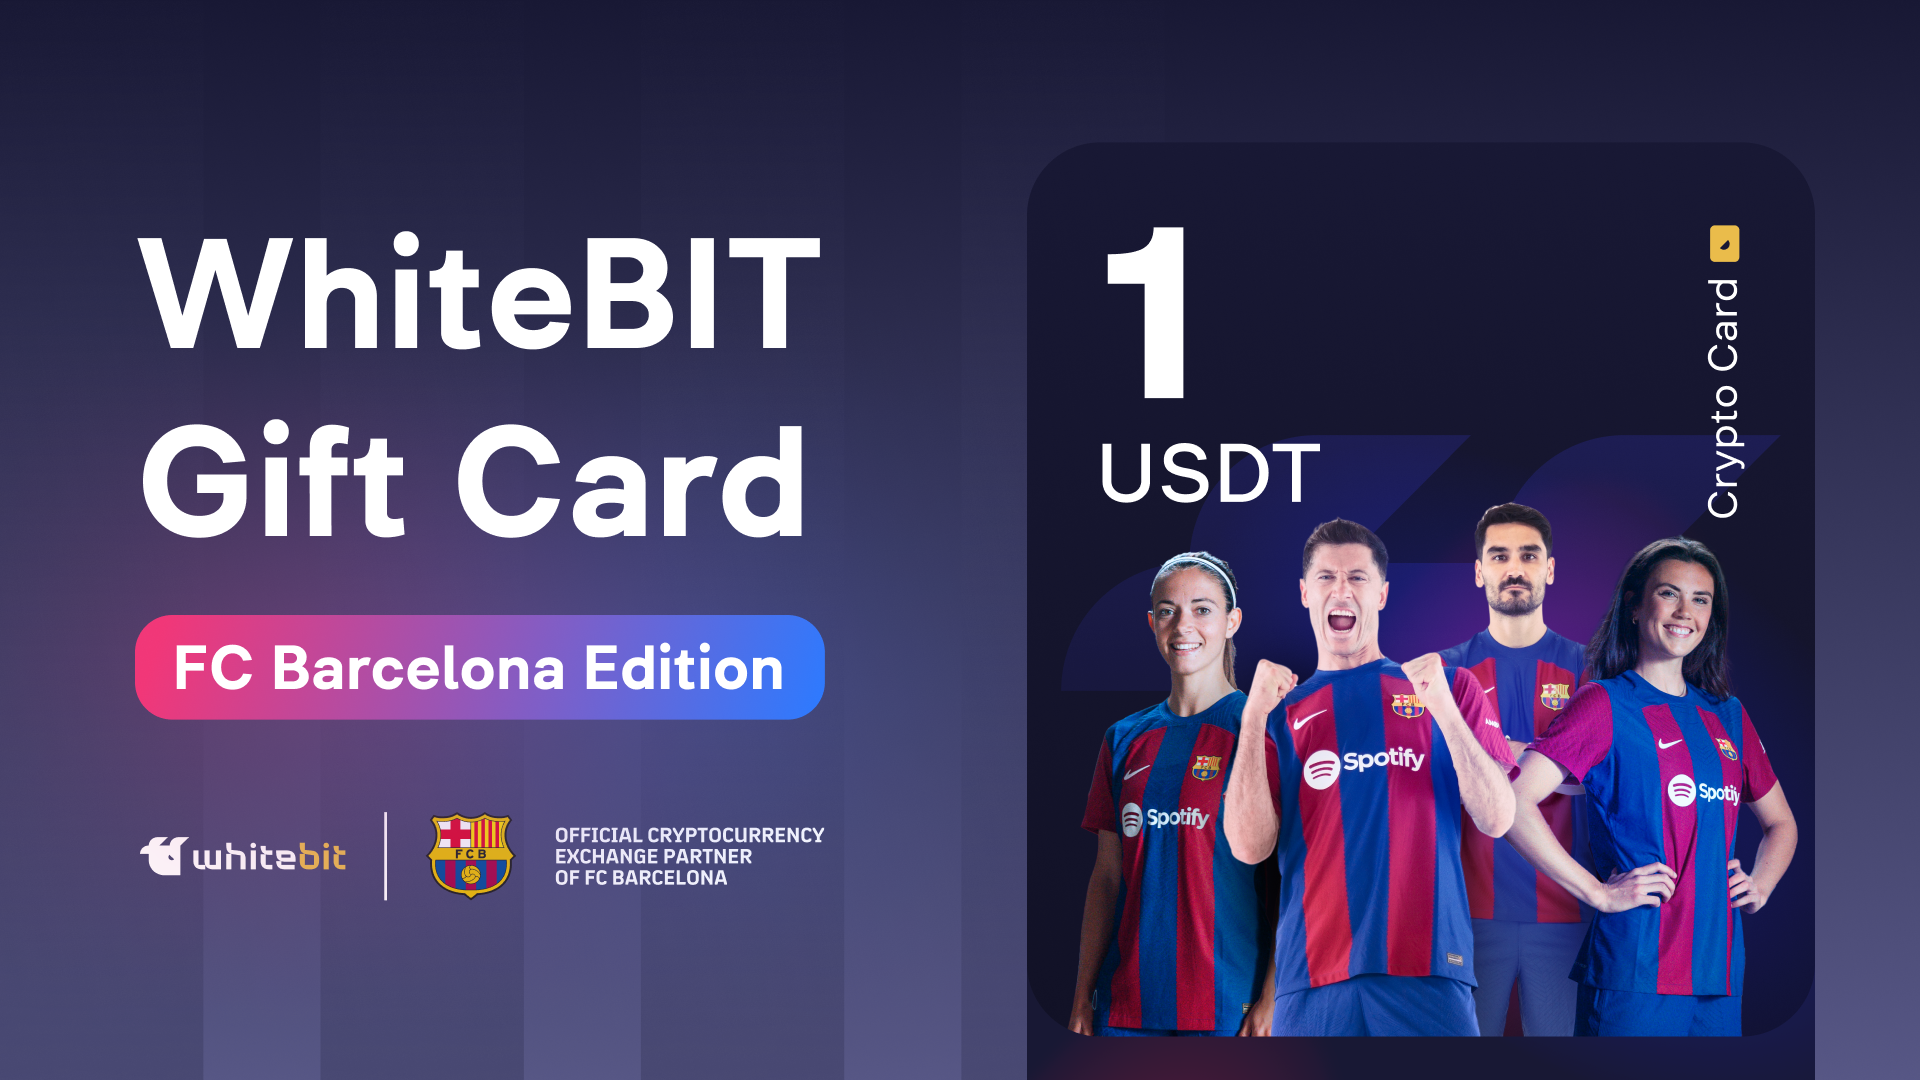 WhiteBIT - FC Barcelona Edition - 1 USDT Gift Card 1.39$